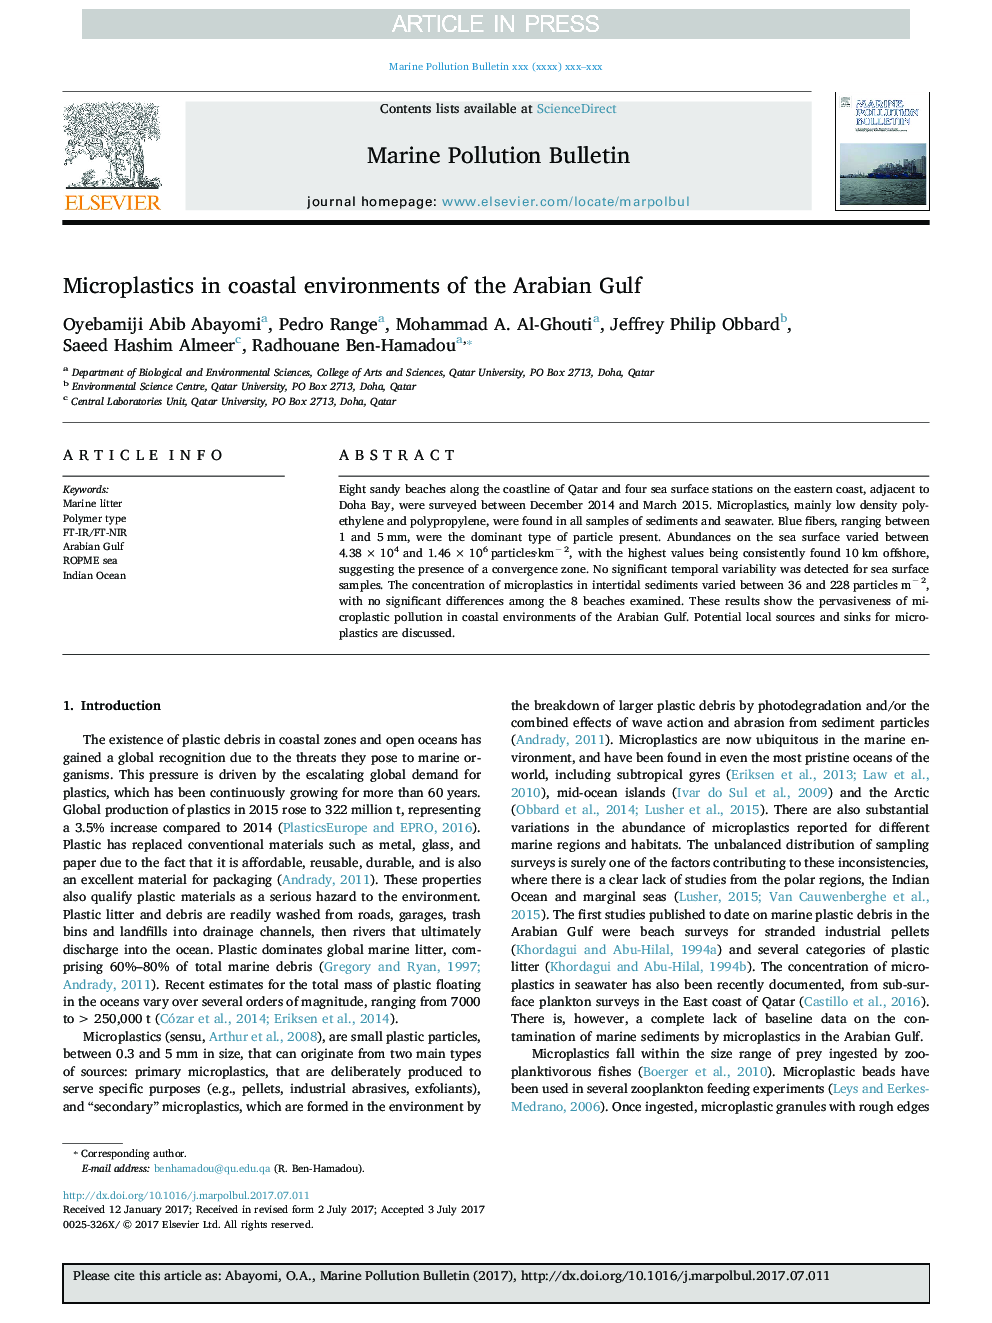 Microplastics in coastal environments of the Arabian Gulf